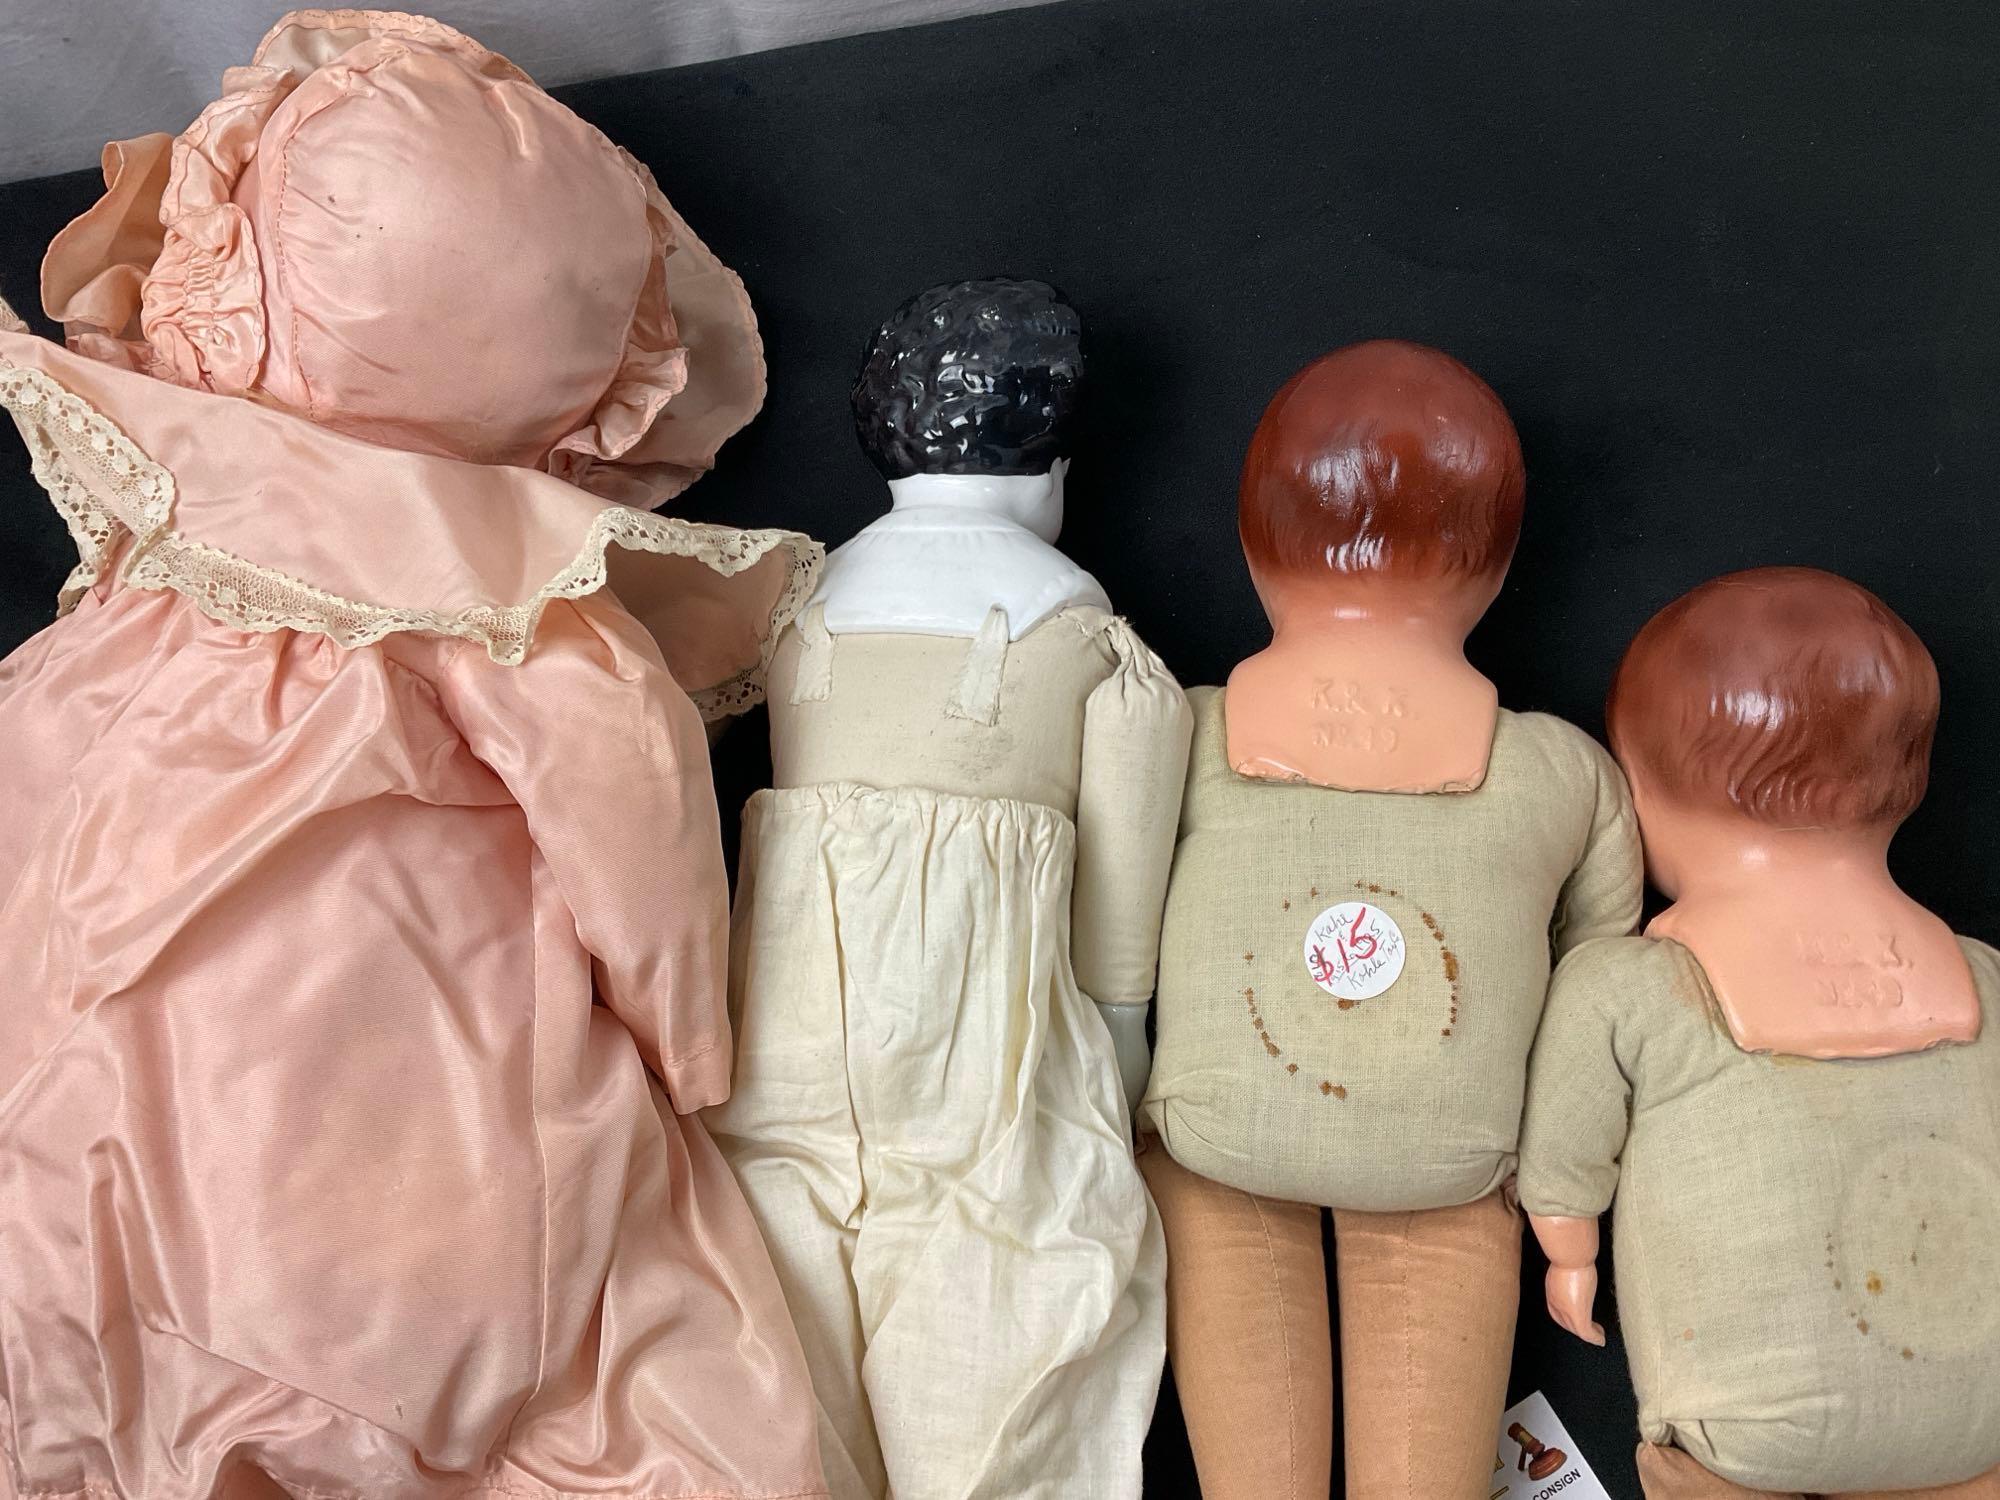 Set of 4 vintage dolls, 1x Antique German Bisque, 2x matching 1920s-30s K&Ks Dolls, 1x Horsman